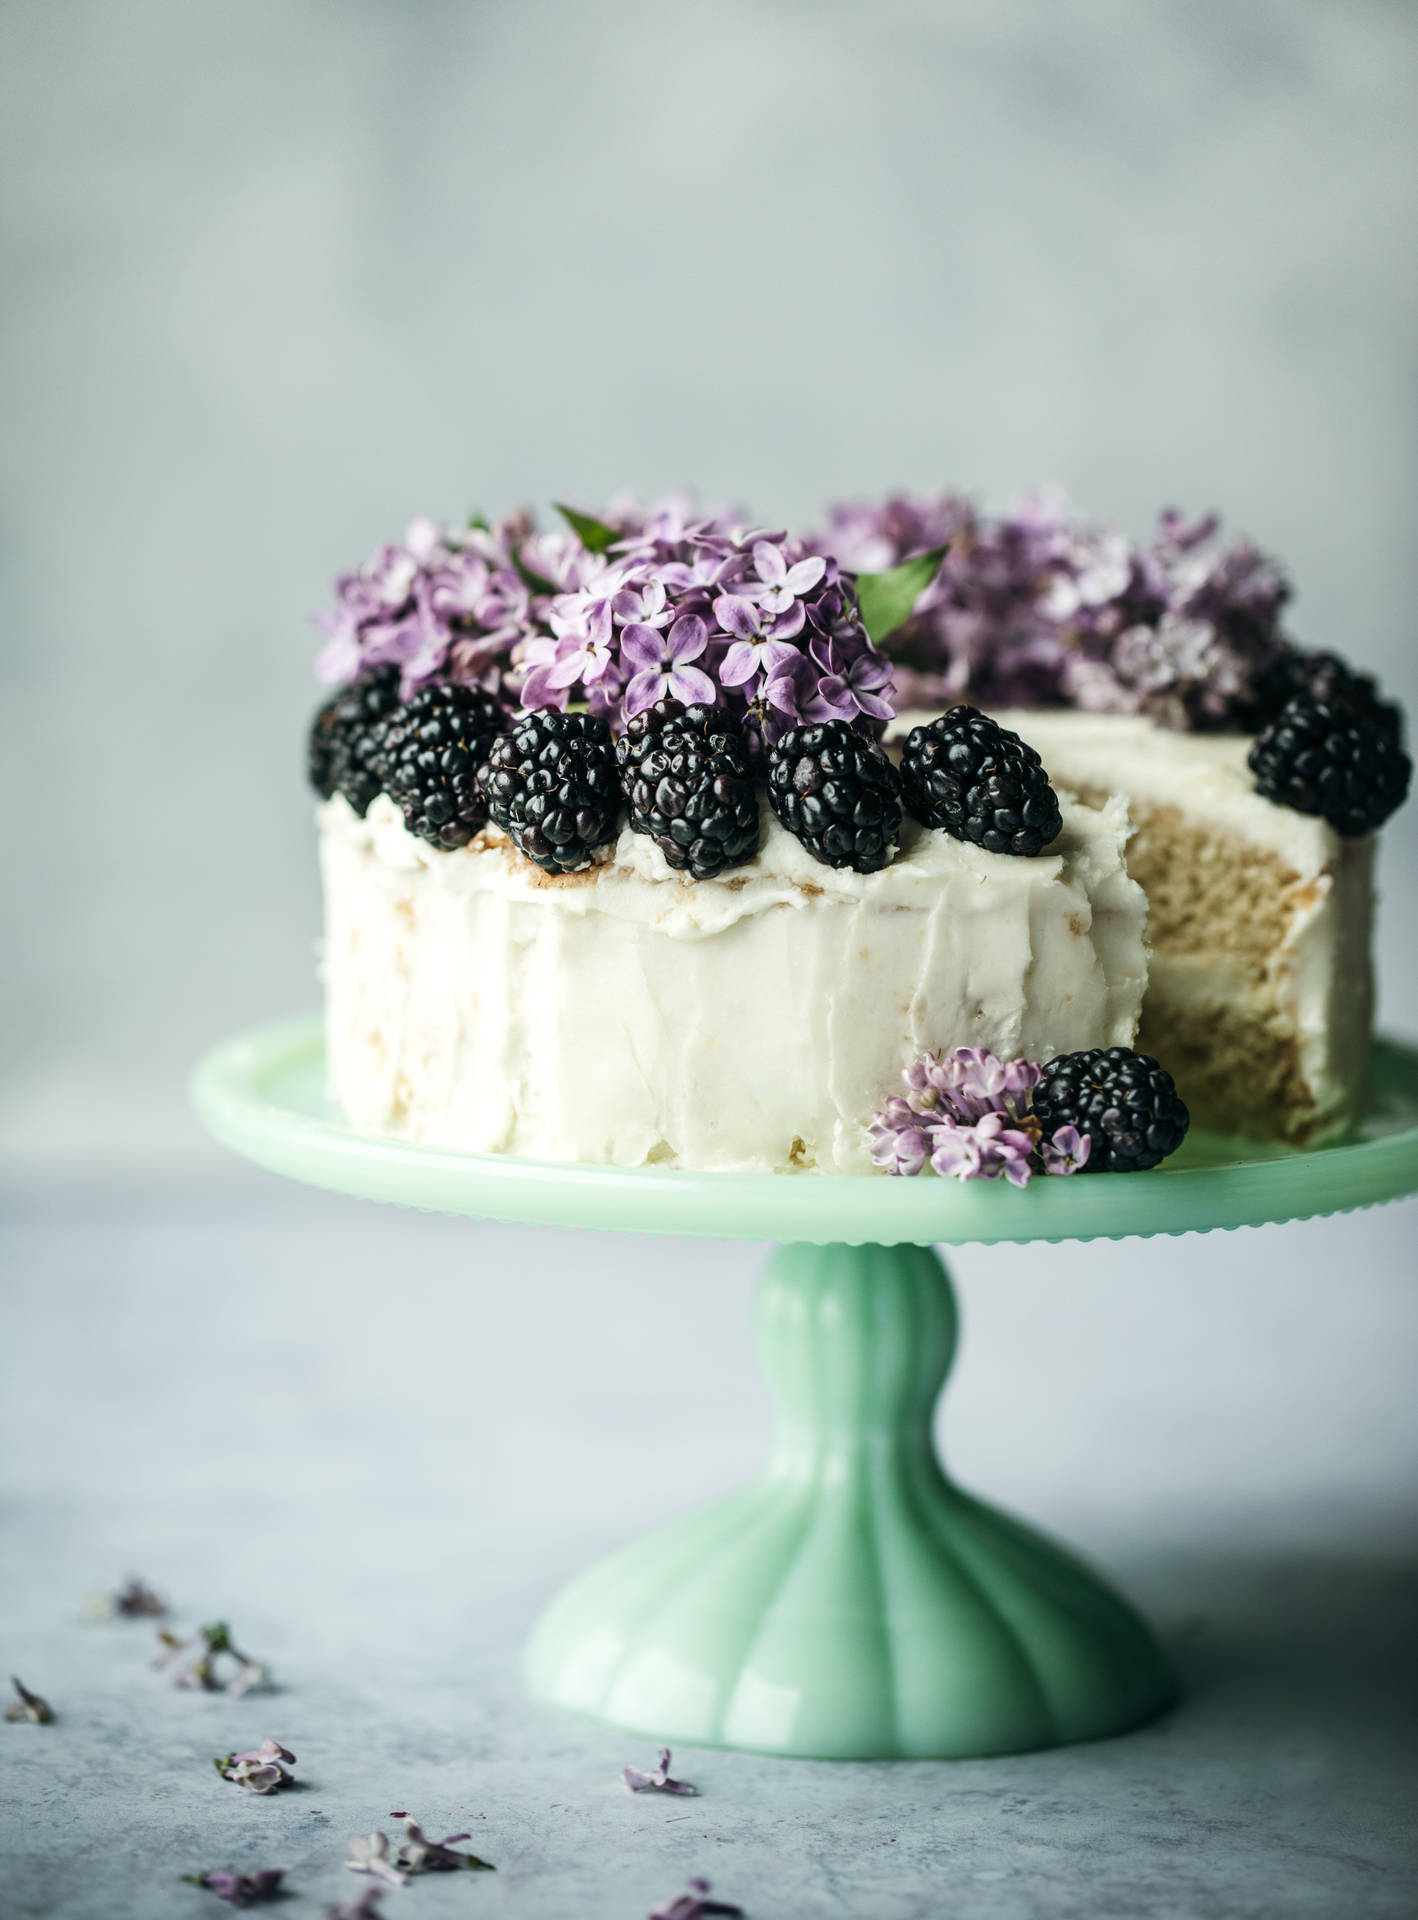 Blueberry Cream Cake Background